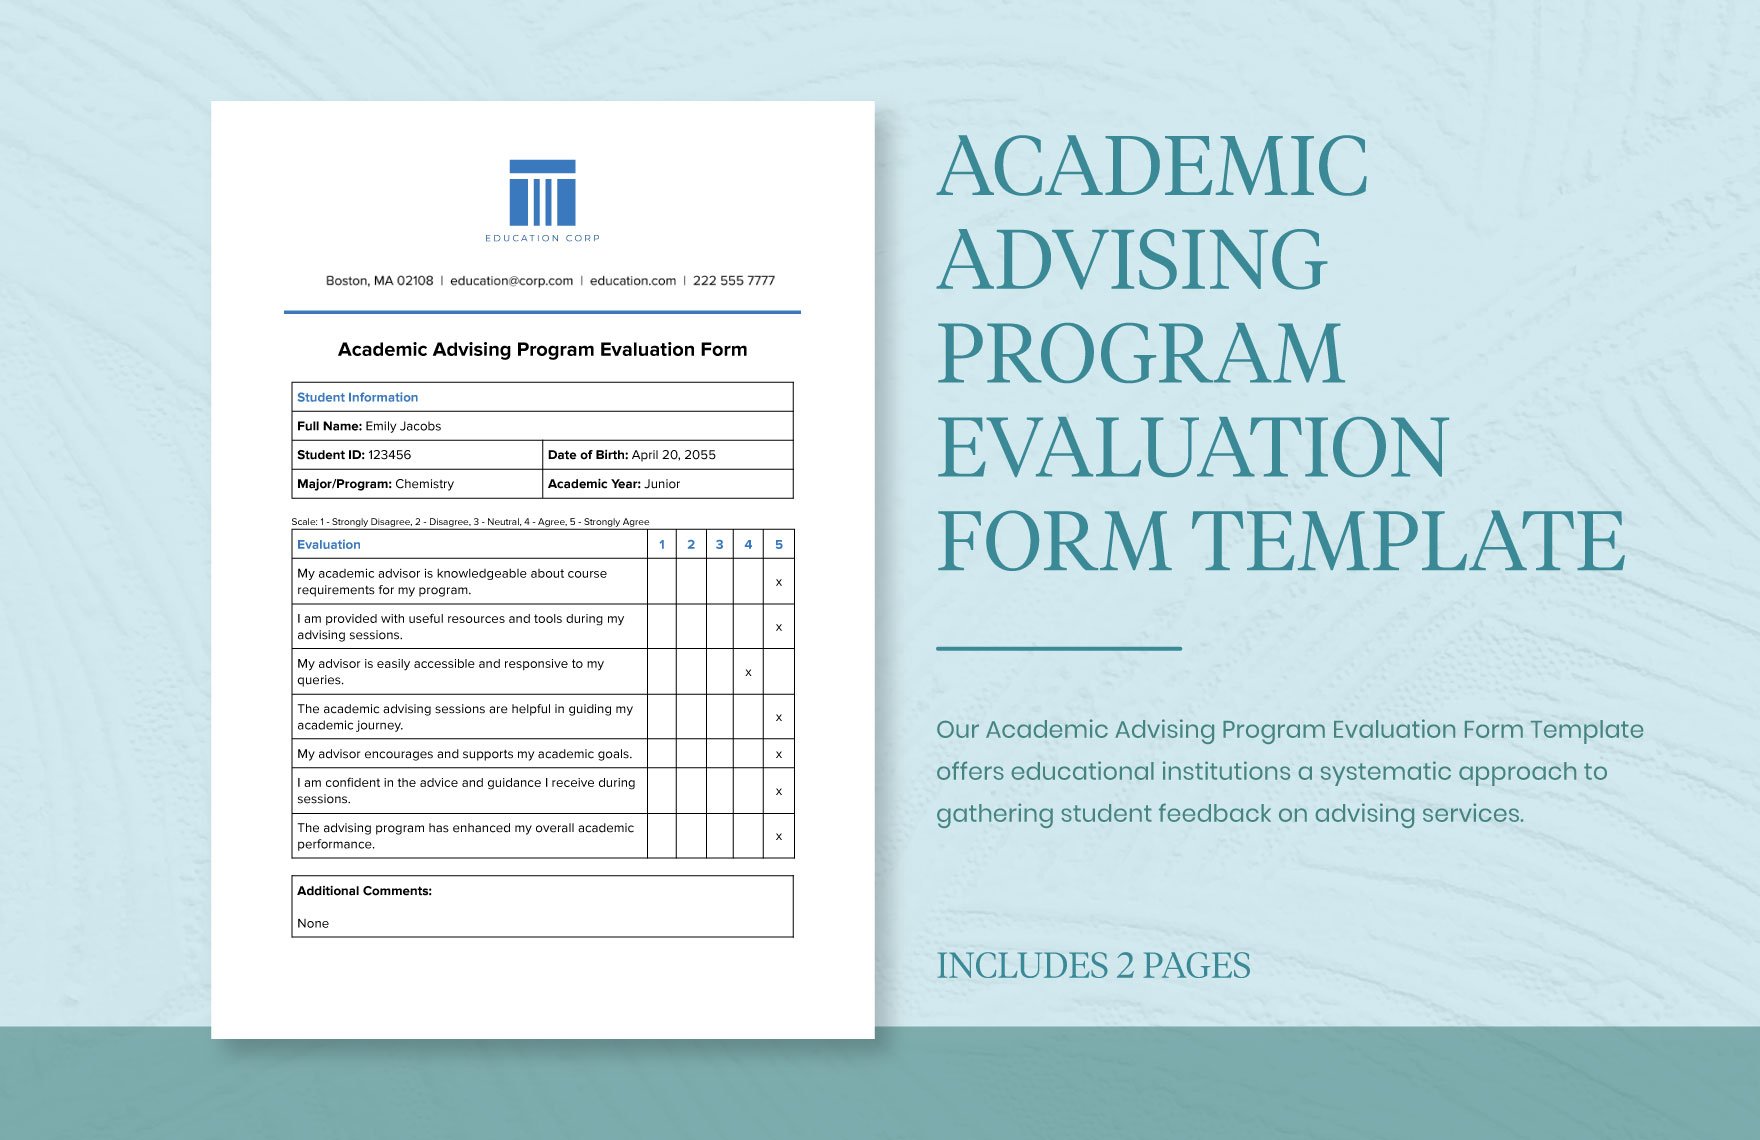 Academic Advising Program Evaluation Form Template in Word, Google Docs, PDF